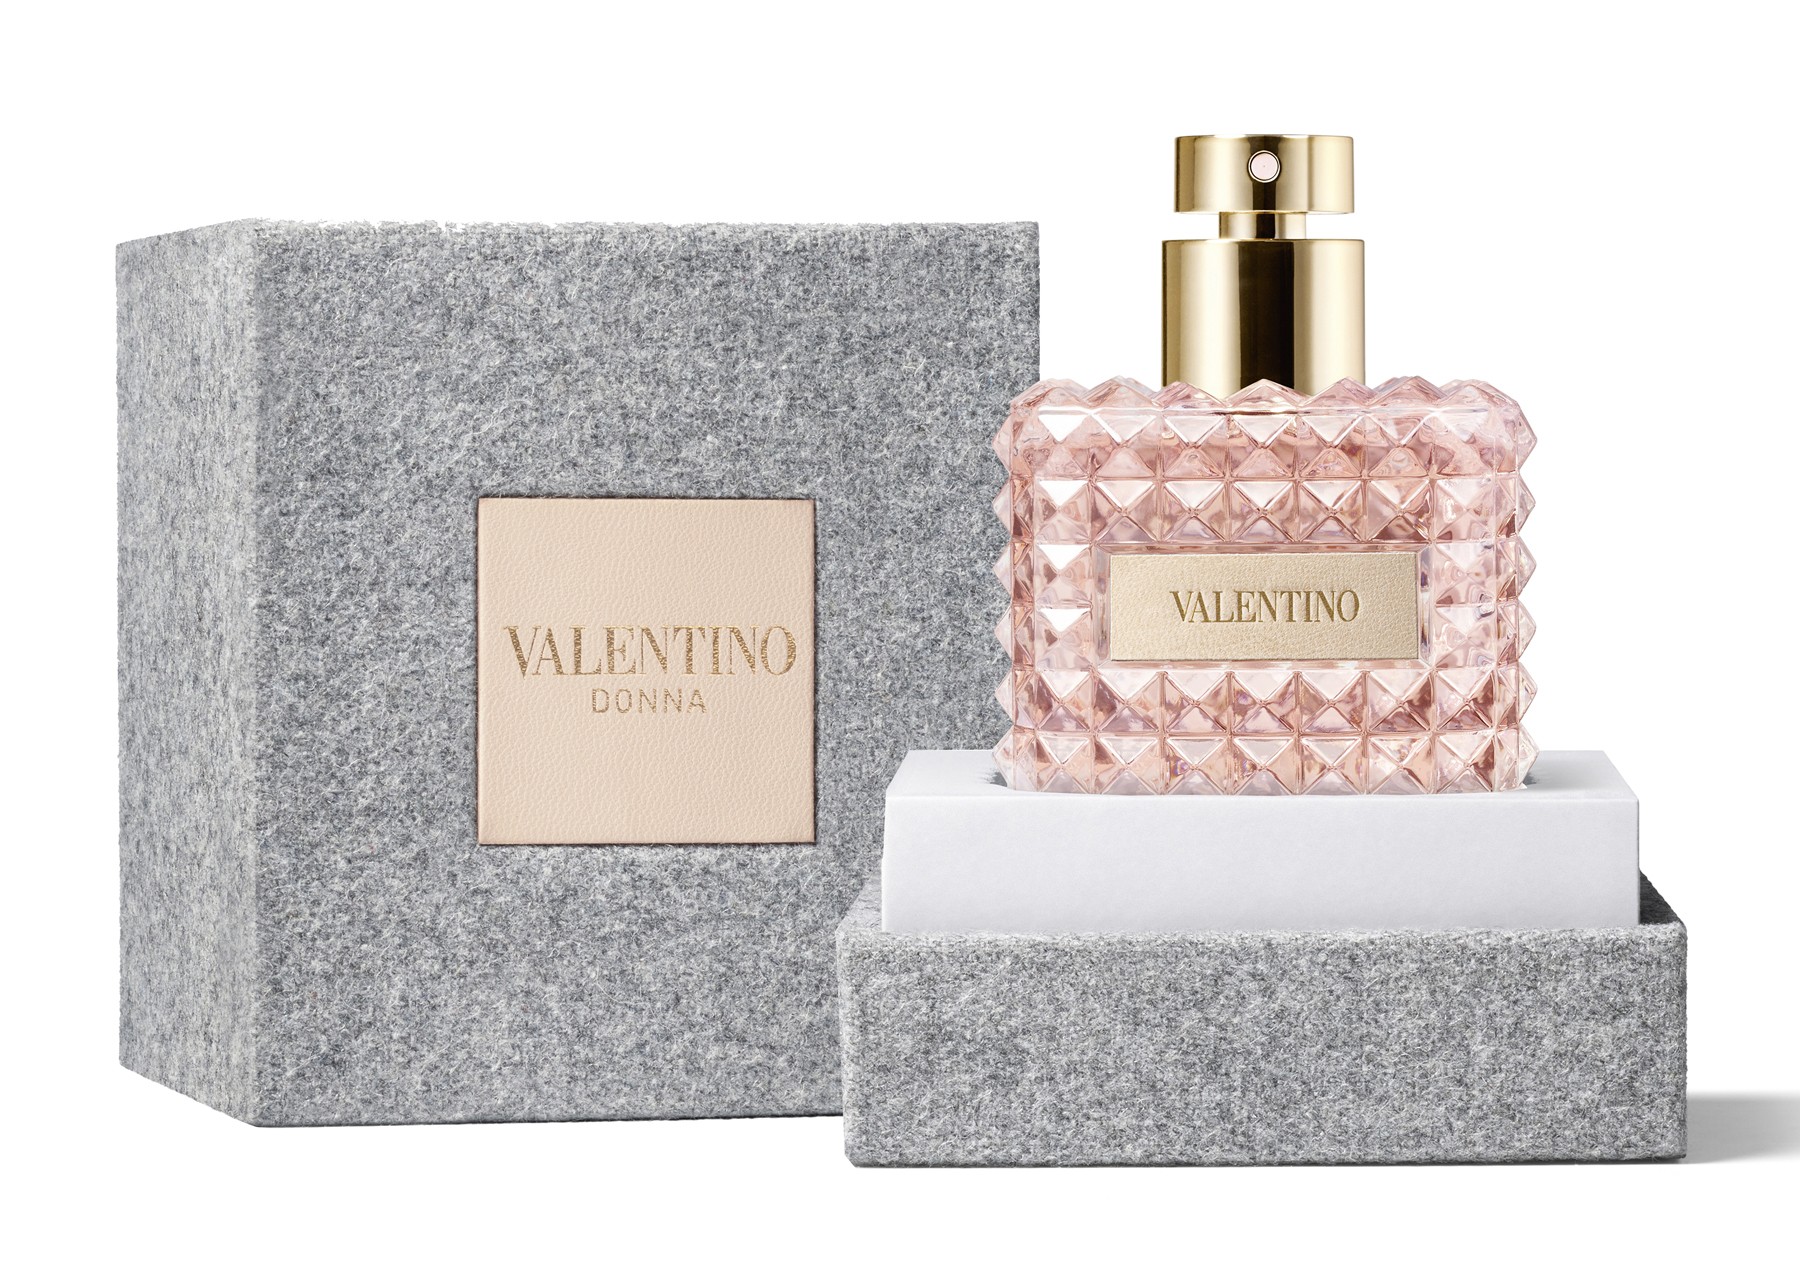 Kết quả hình ảnh cho Valentino Donna Collector Limited Edition